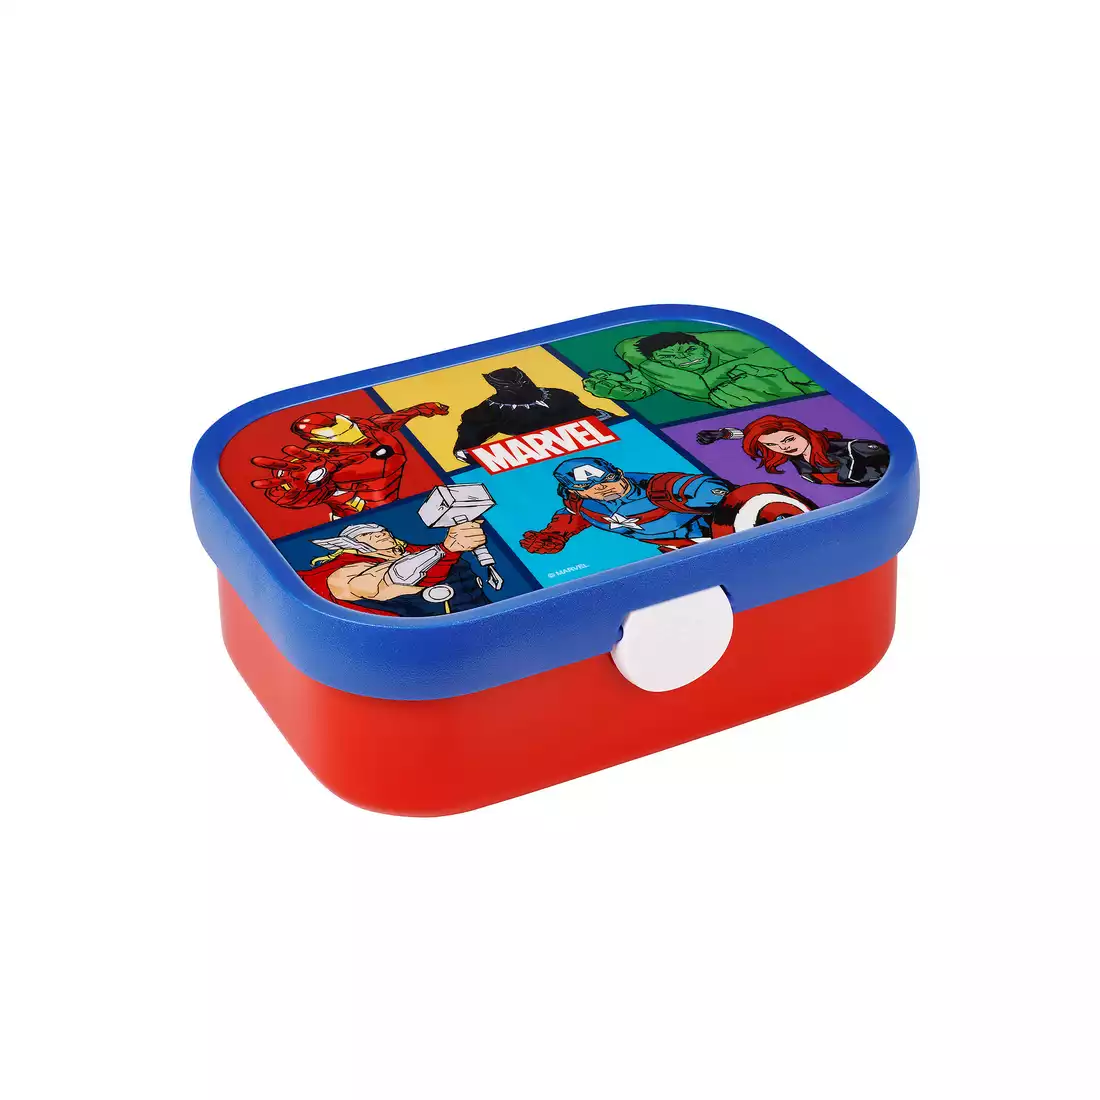 Mepal Campus Avengers Kinder-lunchbox, rot und marineblau